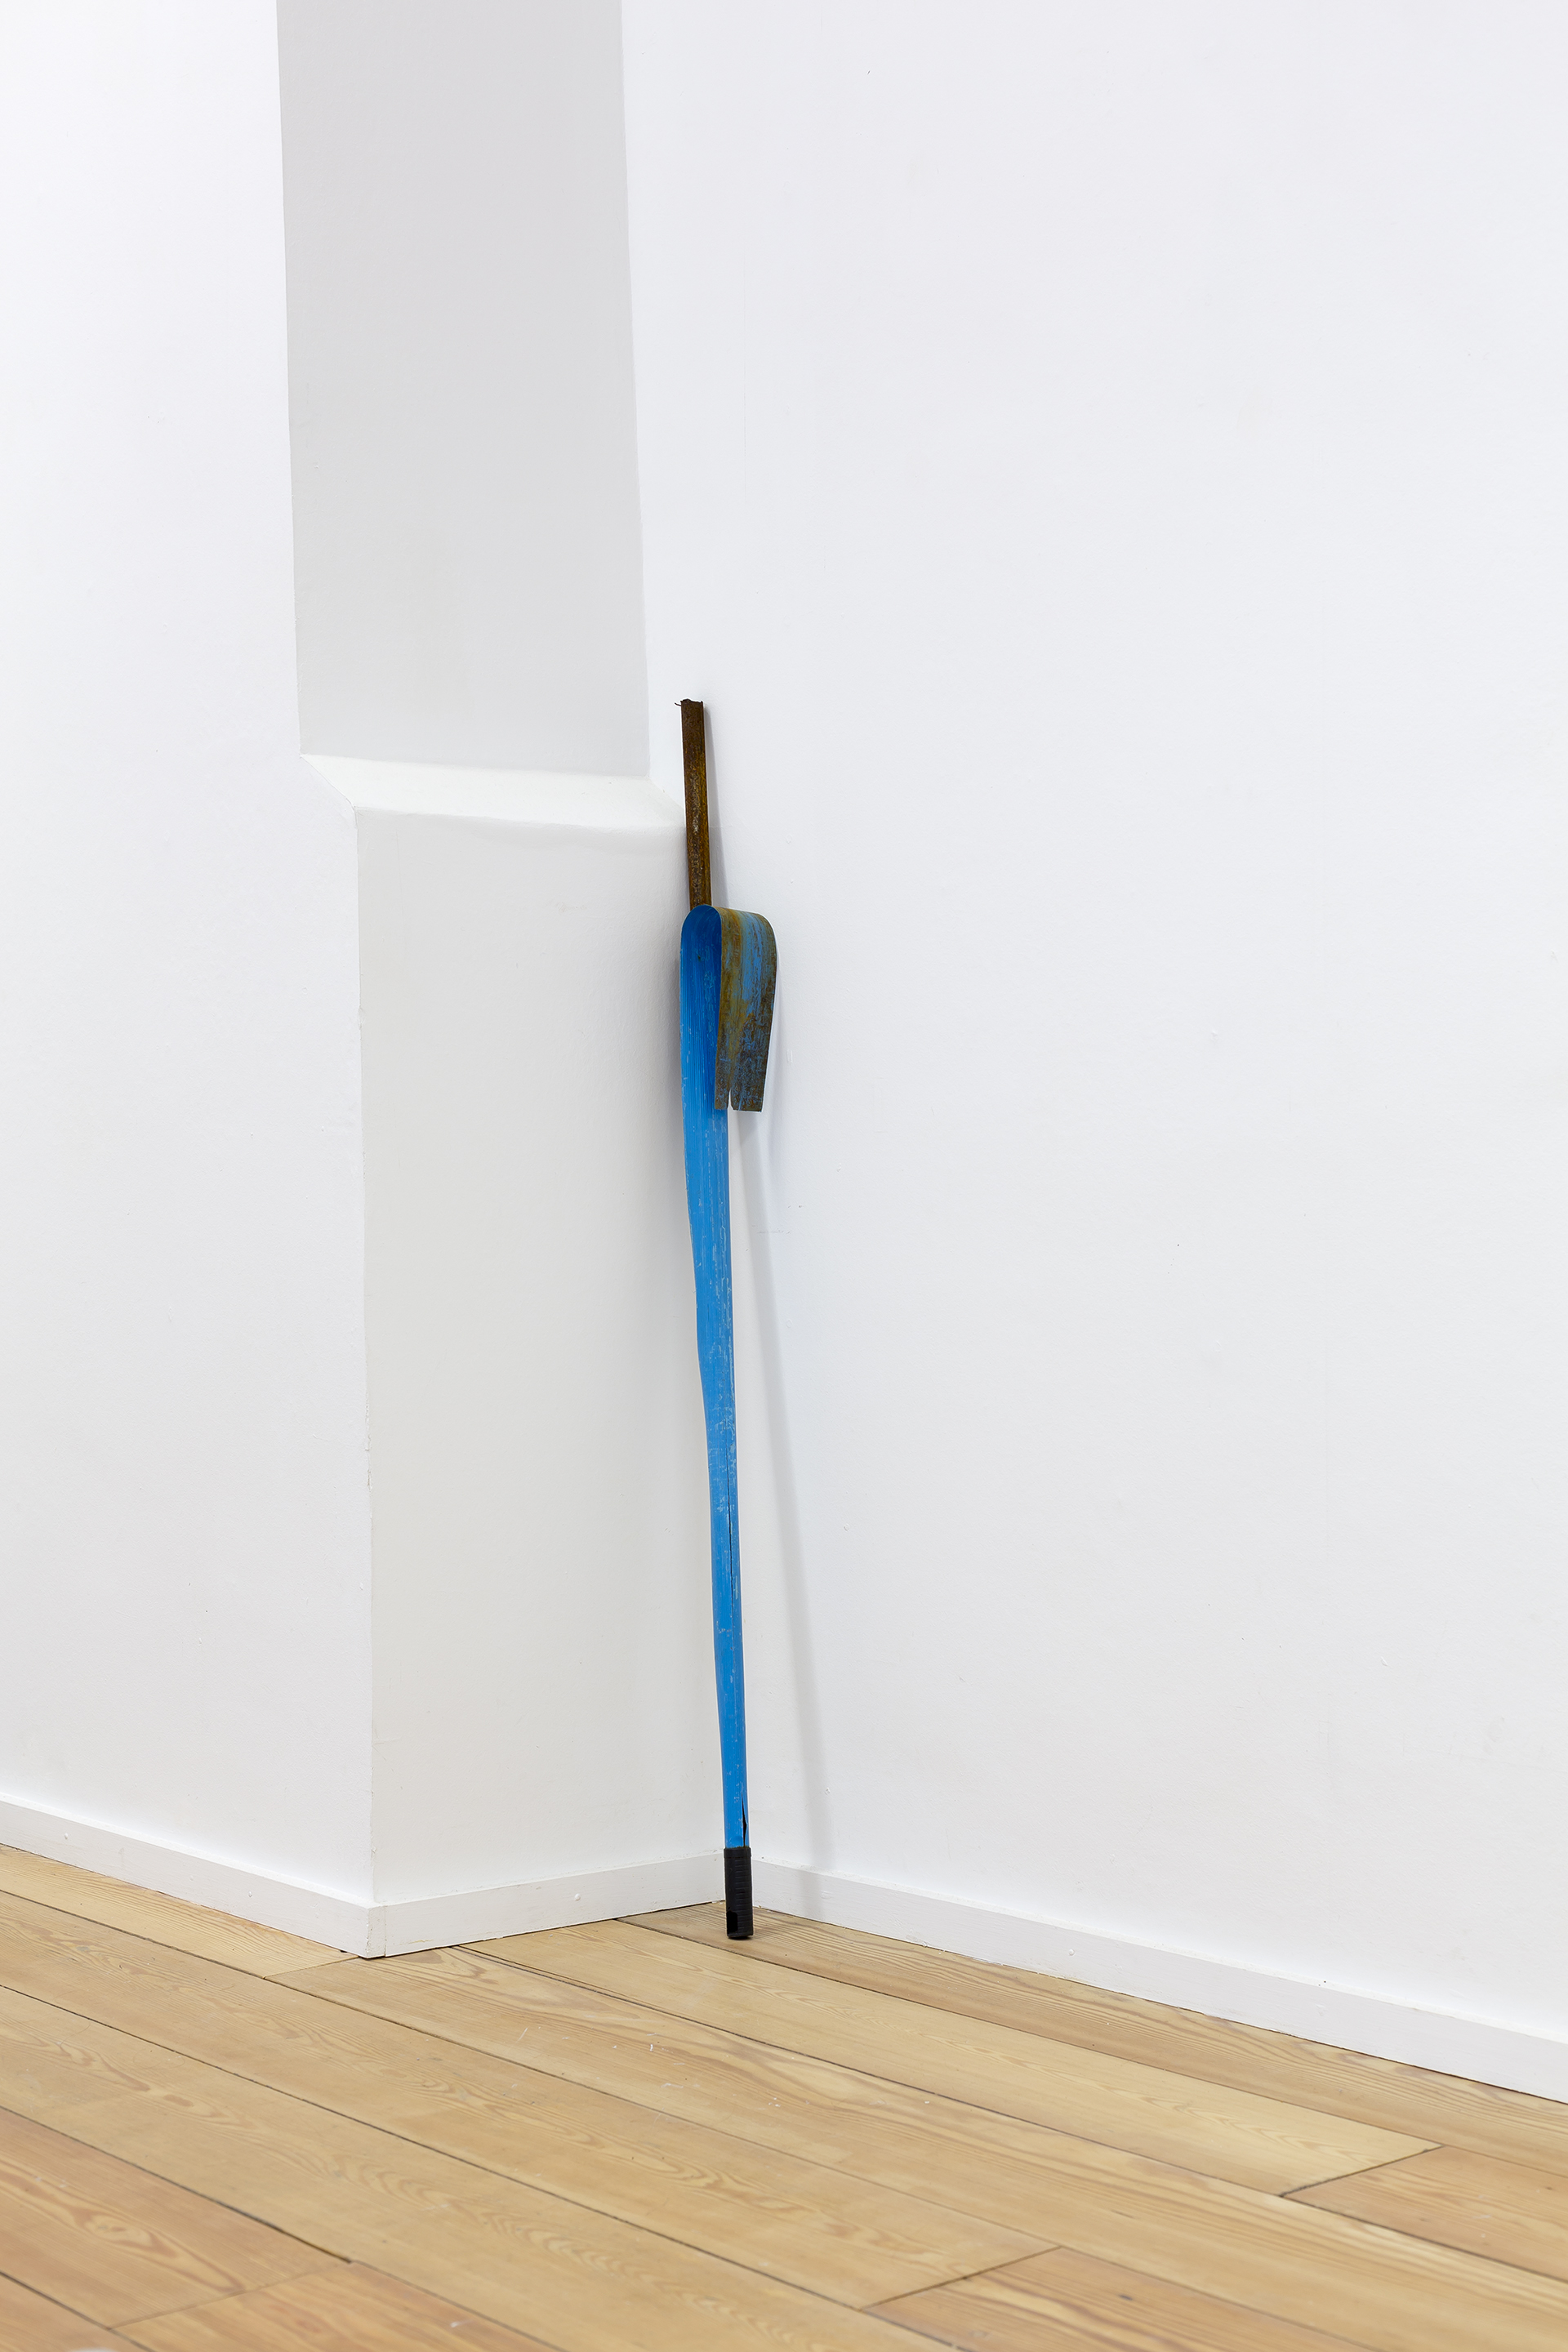 'Untitled (found object)' by Sara Bjarland